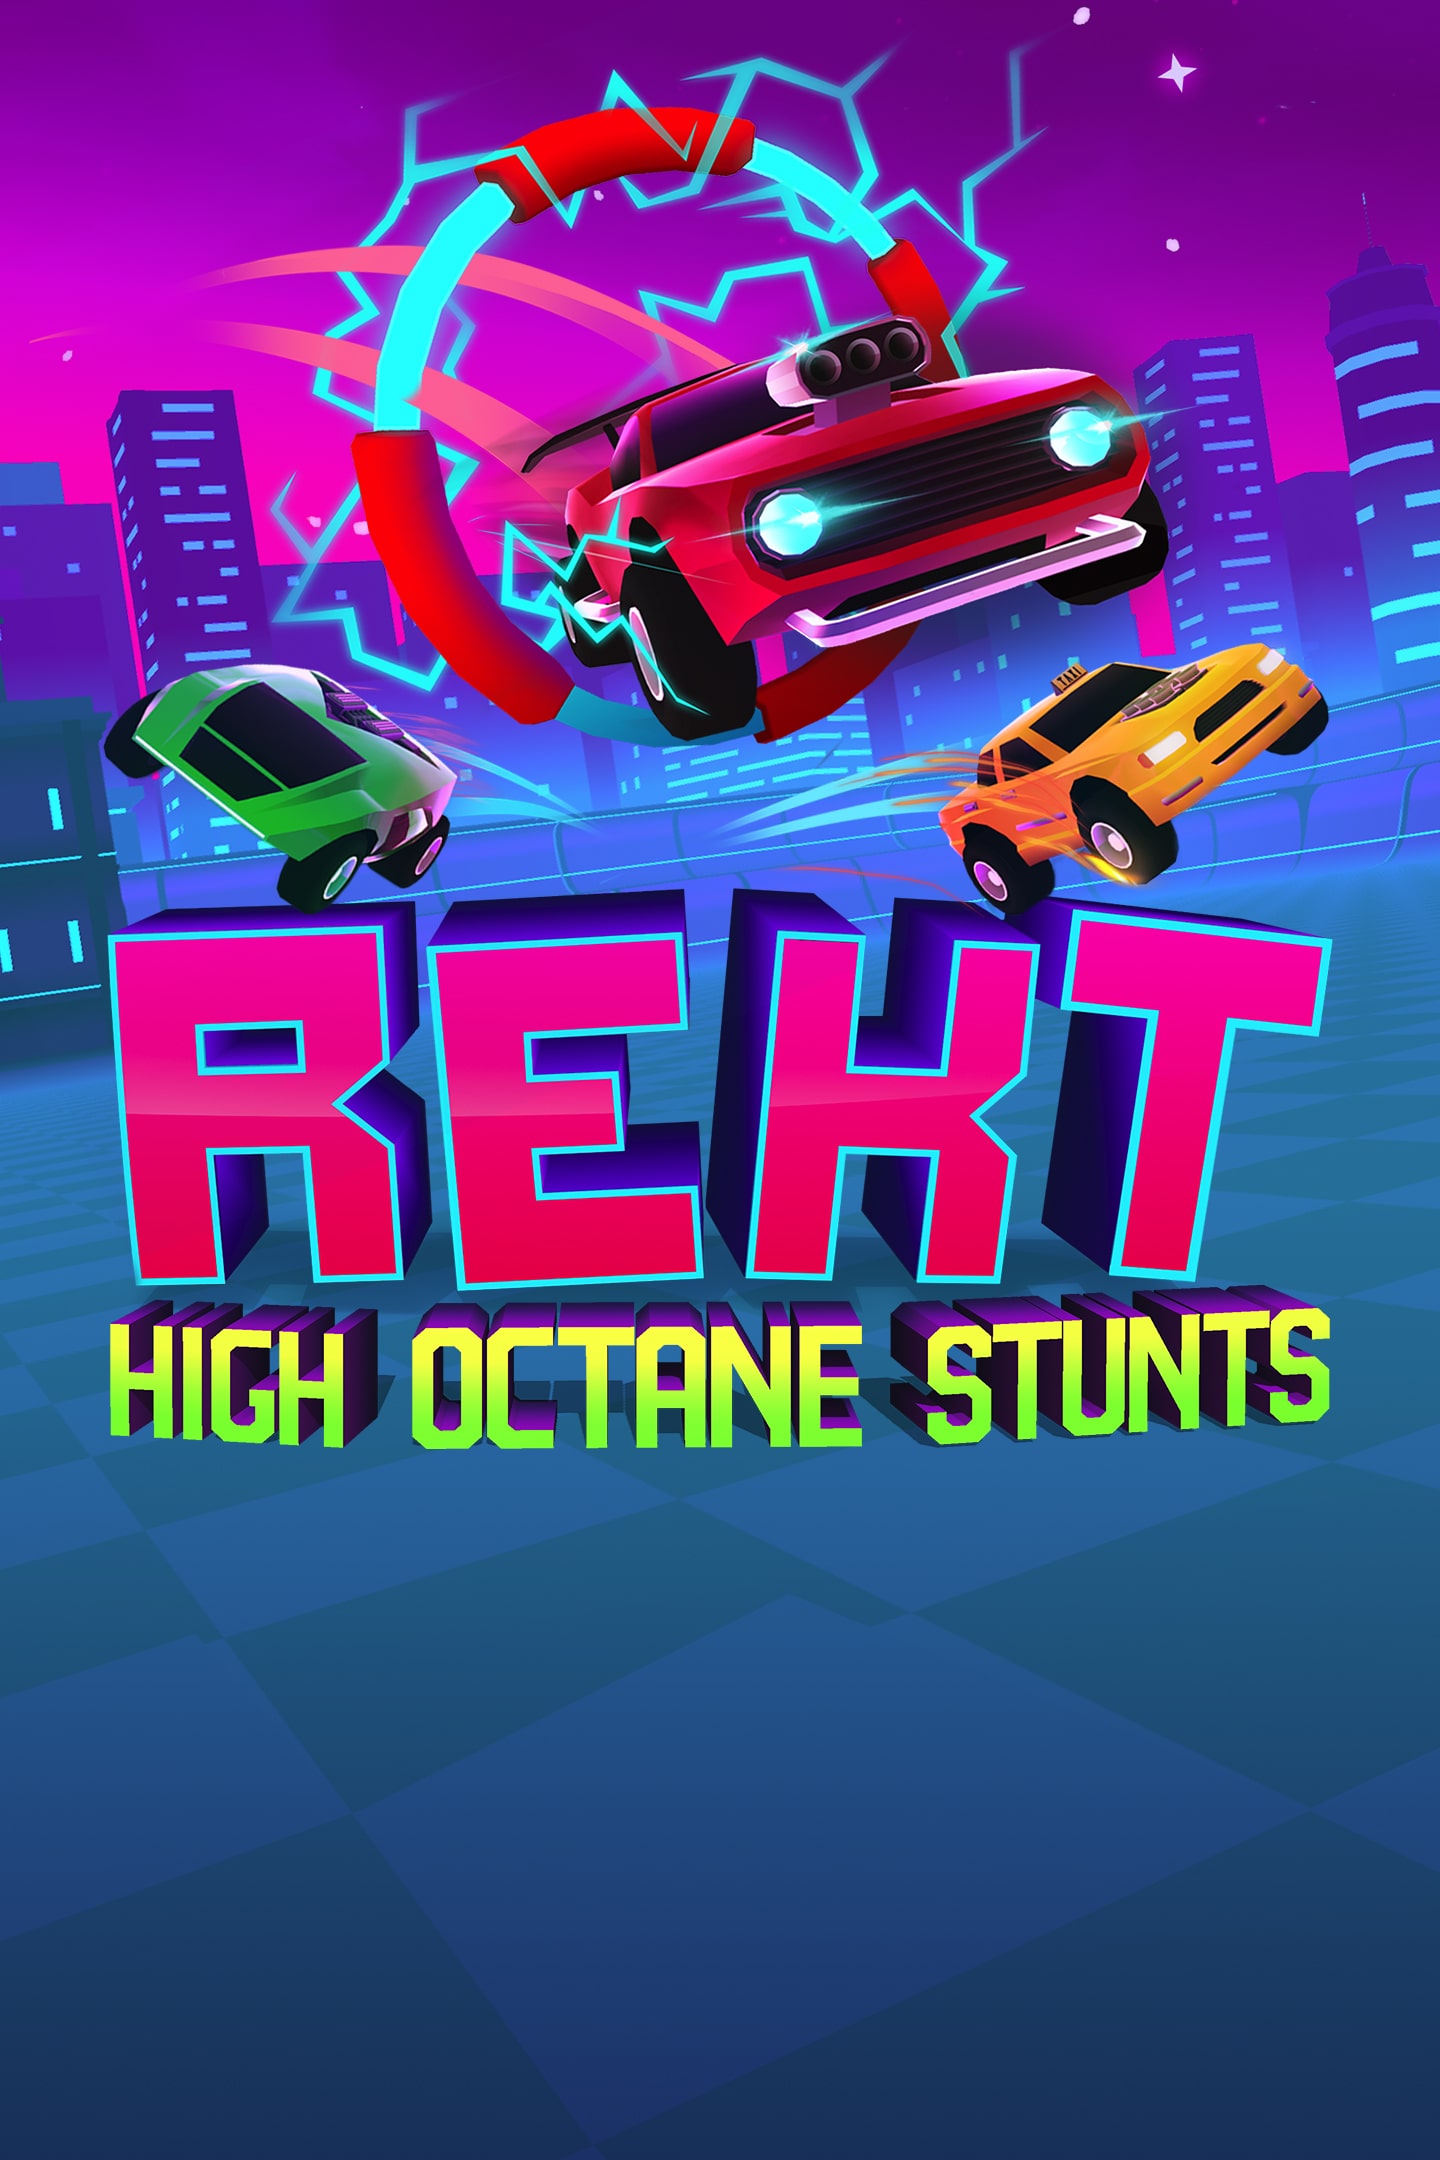 REKT - High Octane Stunts